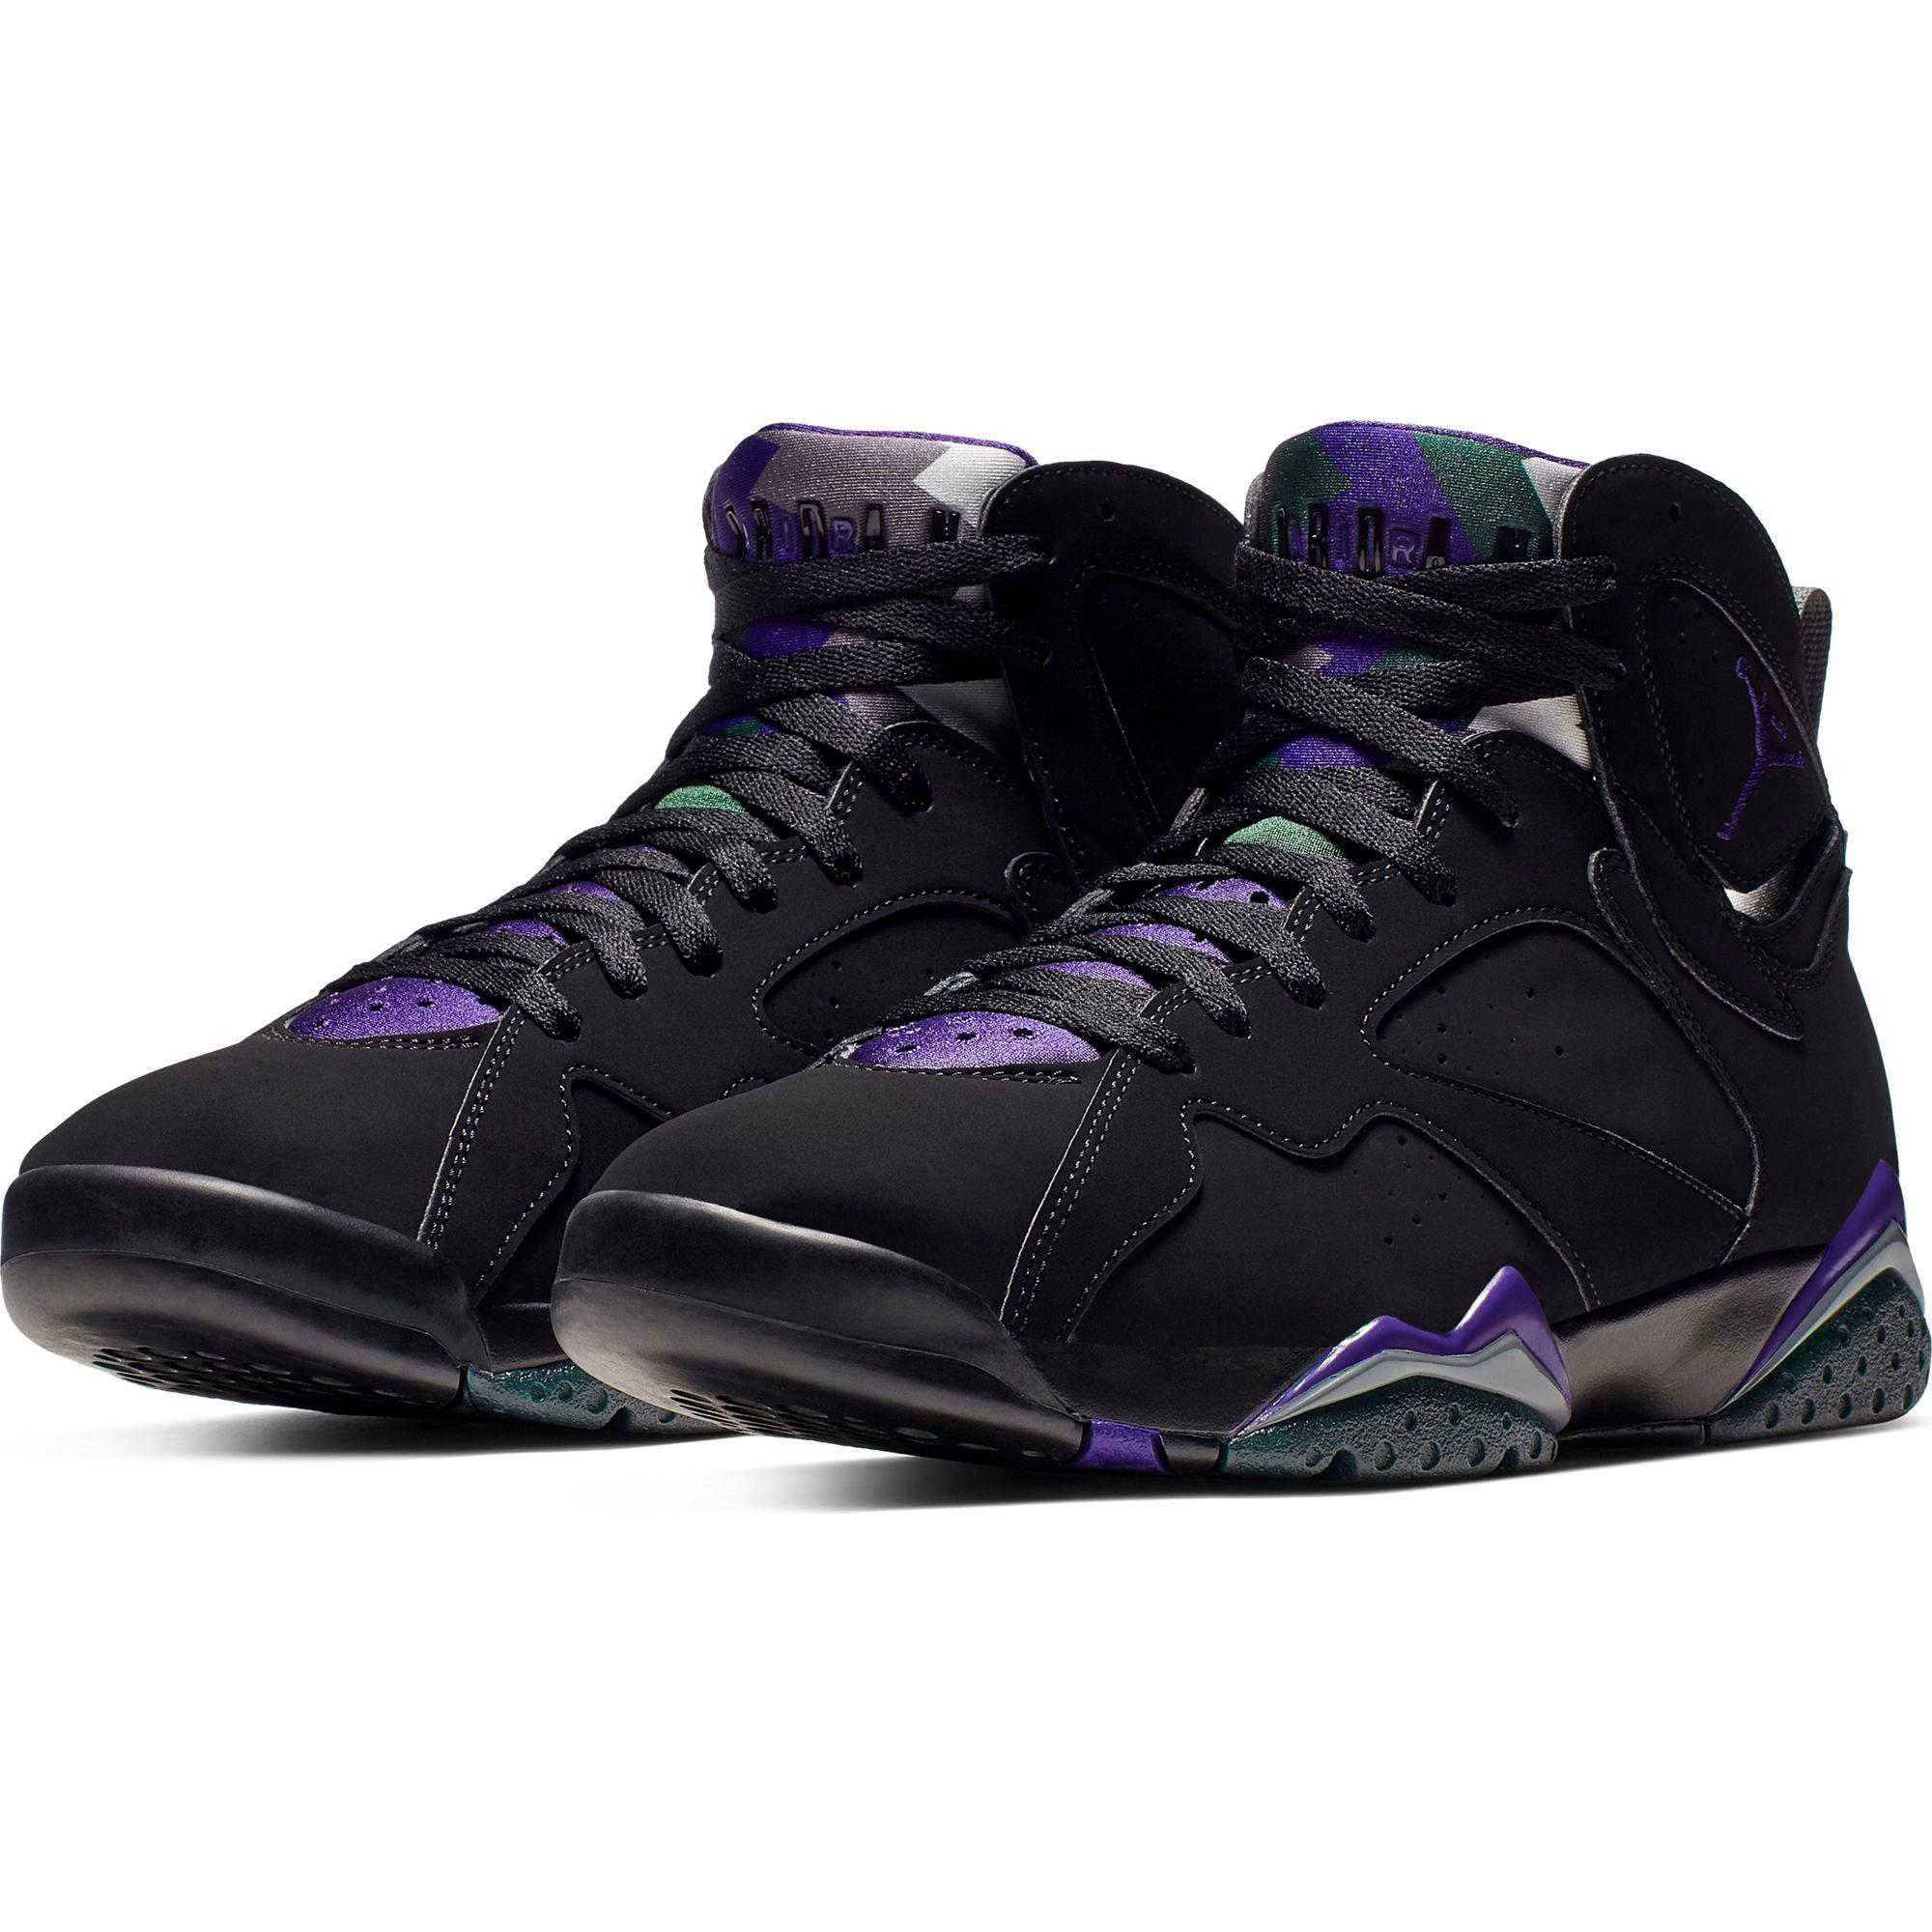 jordan shoes purple and black